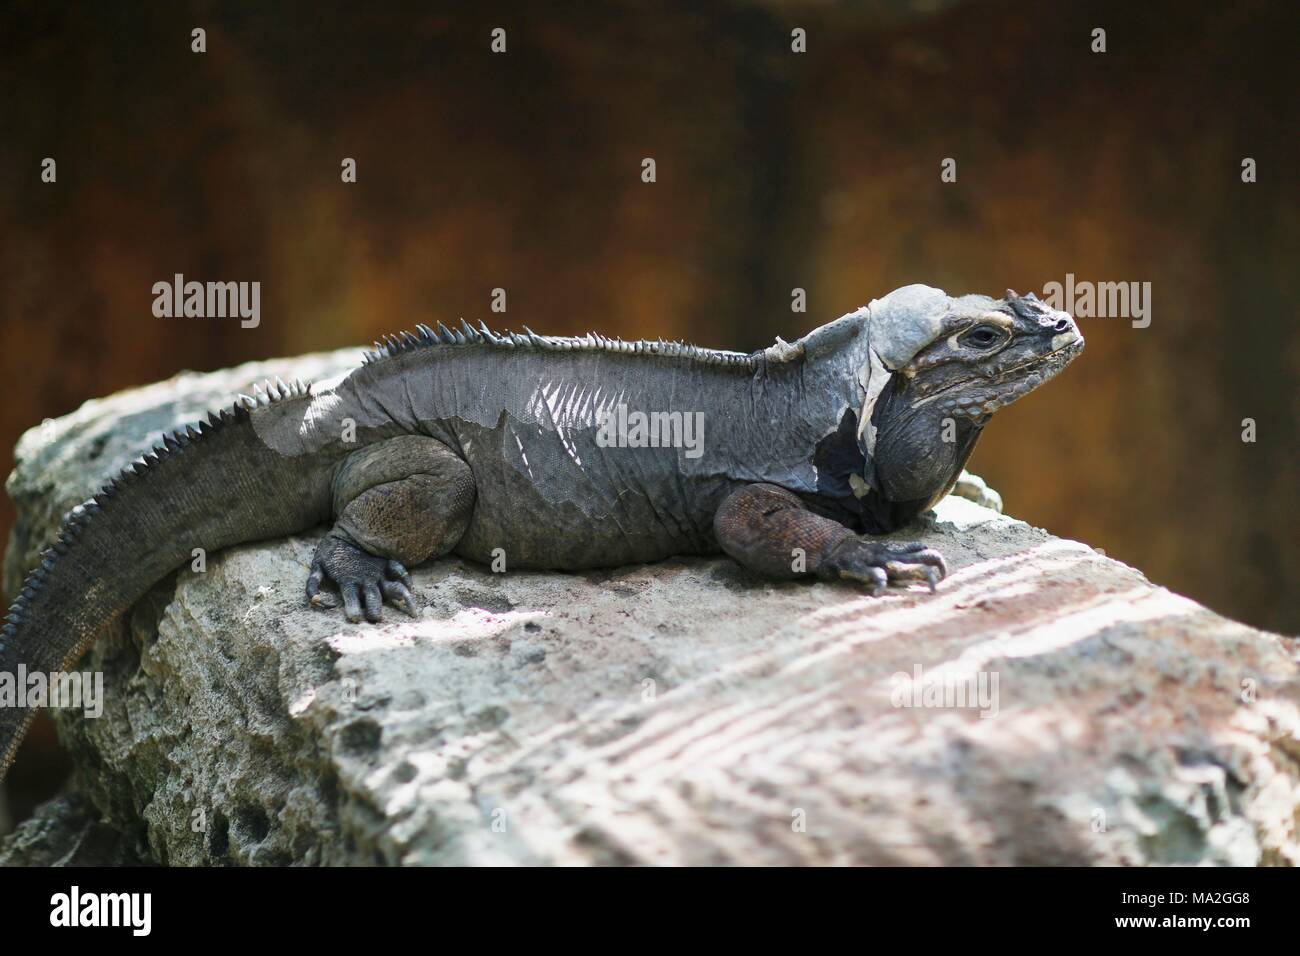 An iguana sunning itself on a stone Stock Photo